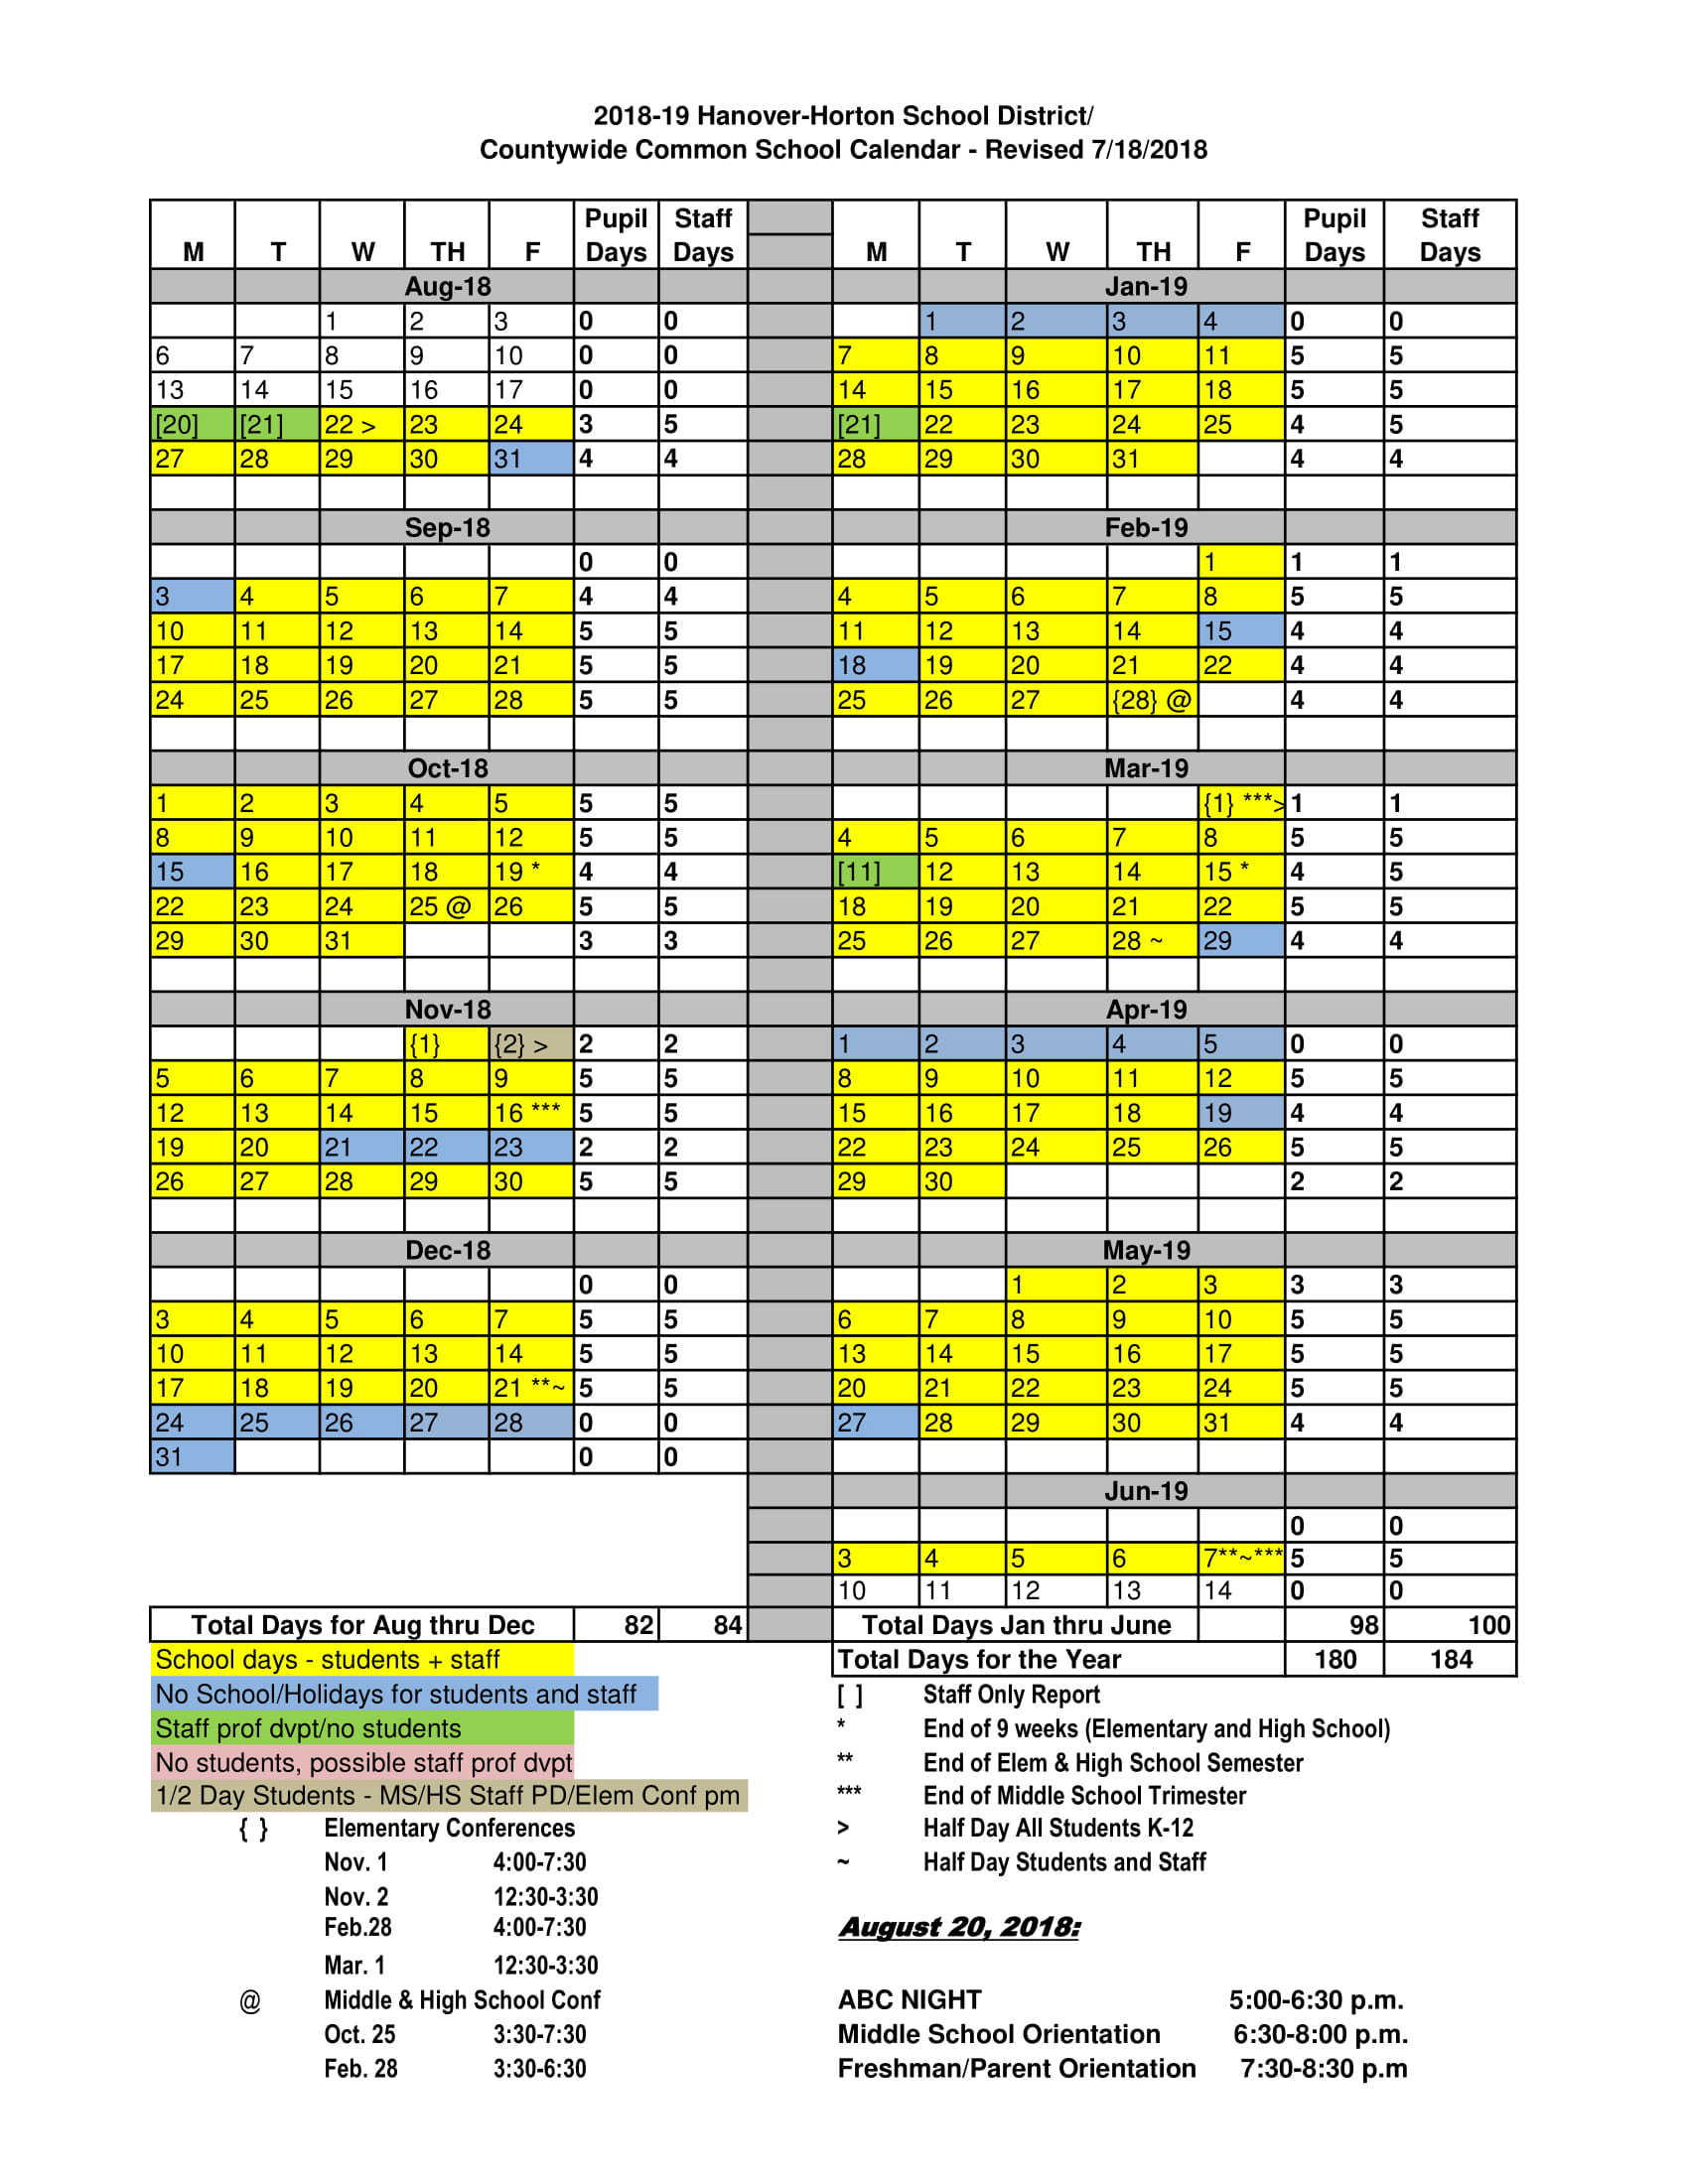 New Hanover School Calendar Time Table